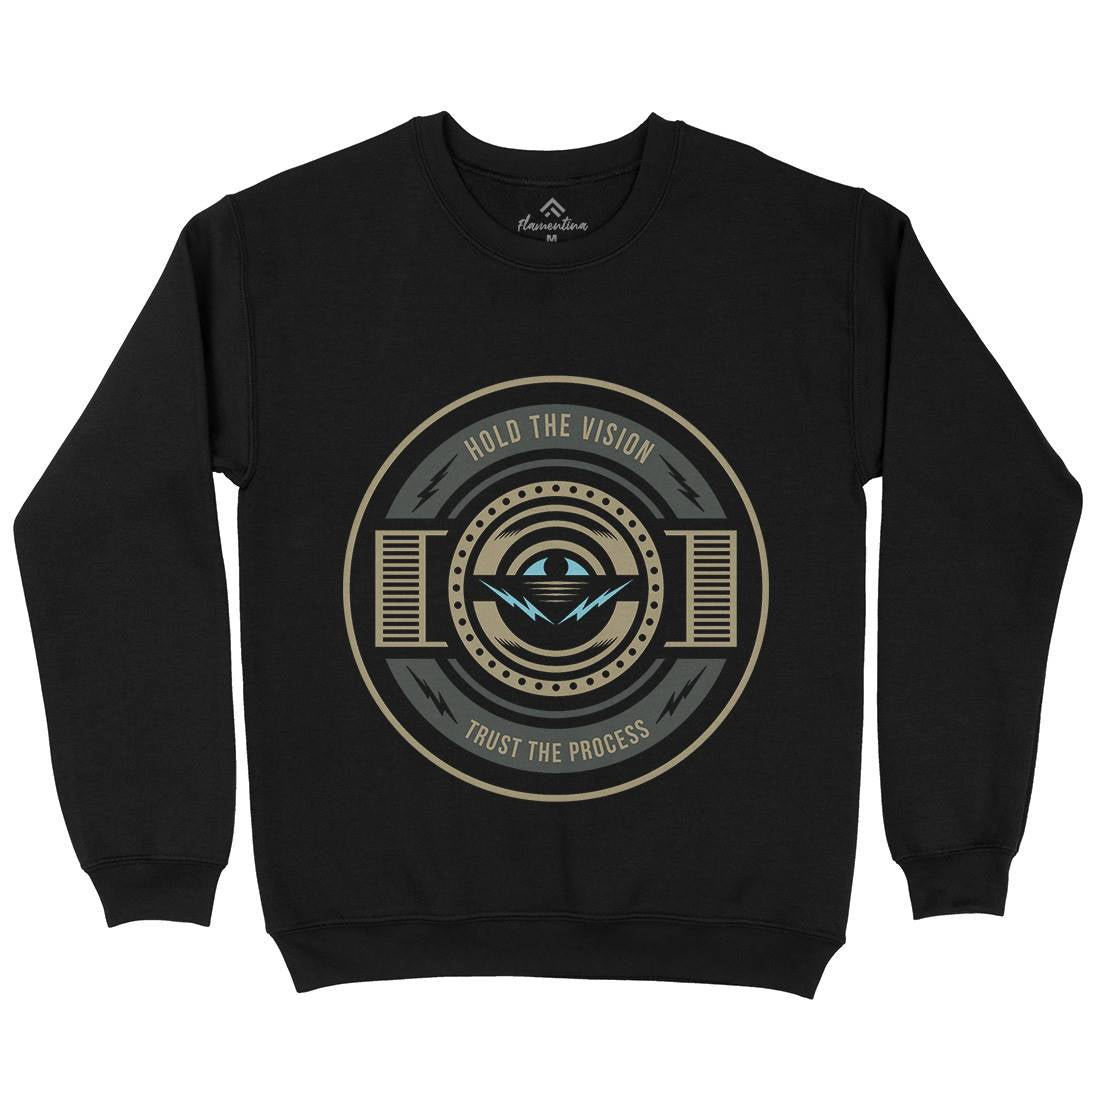 Hold The Vision Kids Crew Neck Sweatshirt Illuminati A331